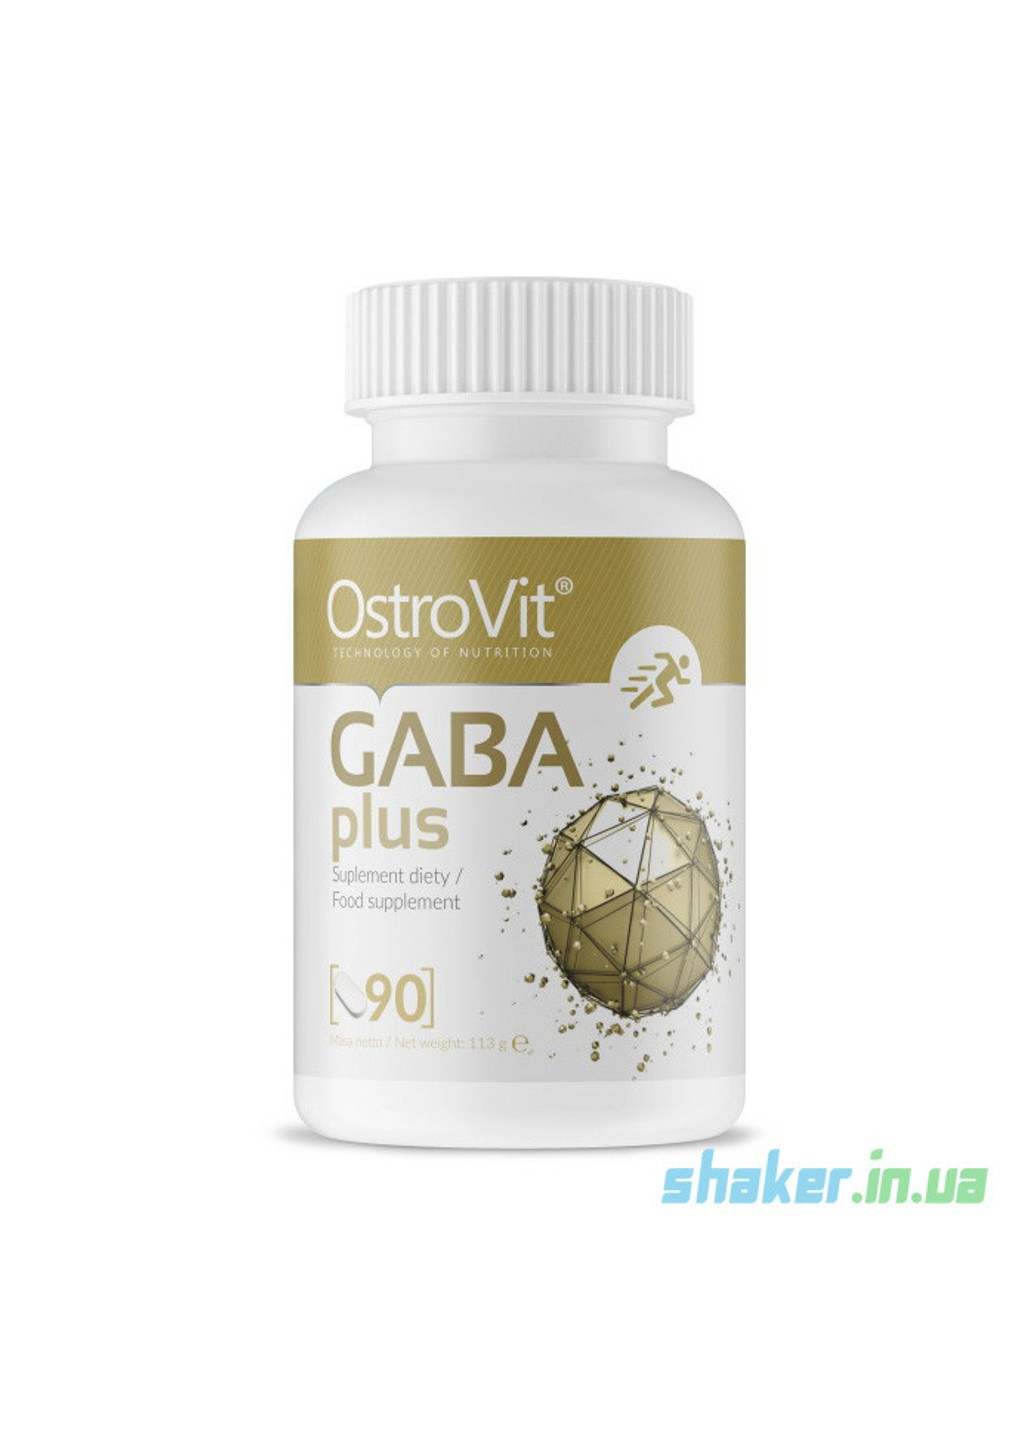 ГАМК Gaba Plus 750 мг (90 таблеток) островит гамма-аминомасляная кислота Ostrovit (255362713)